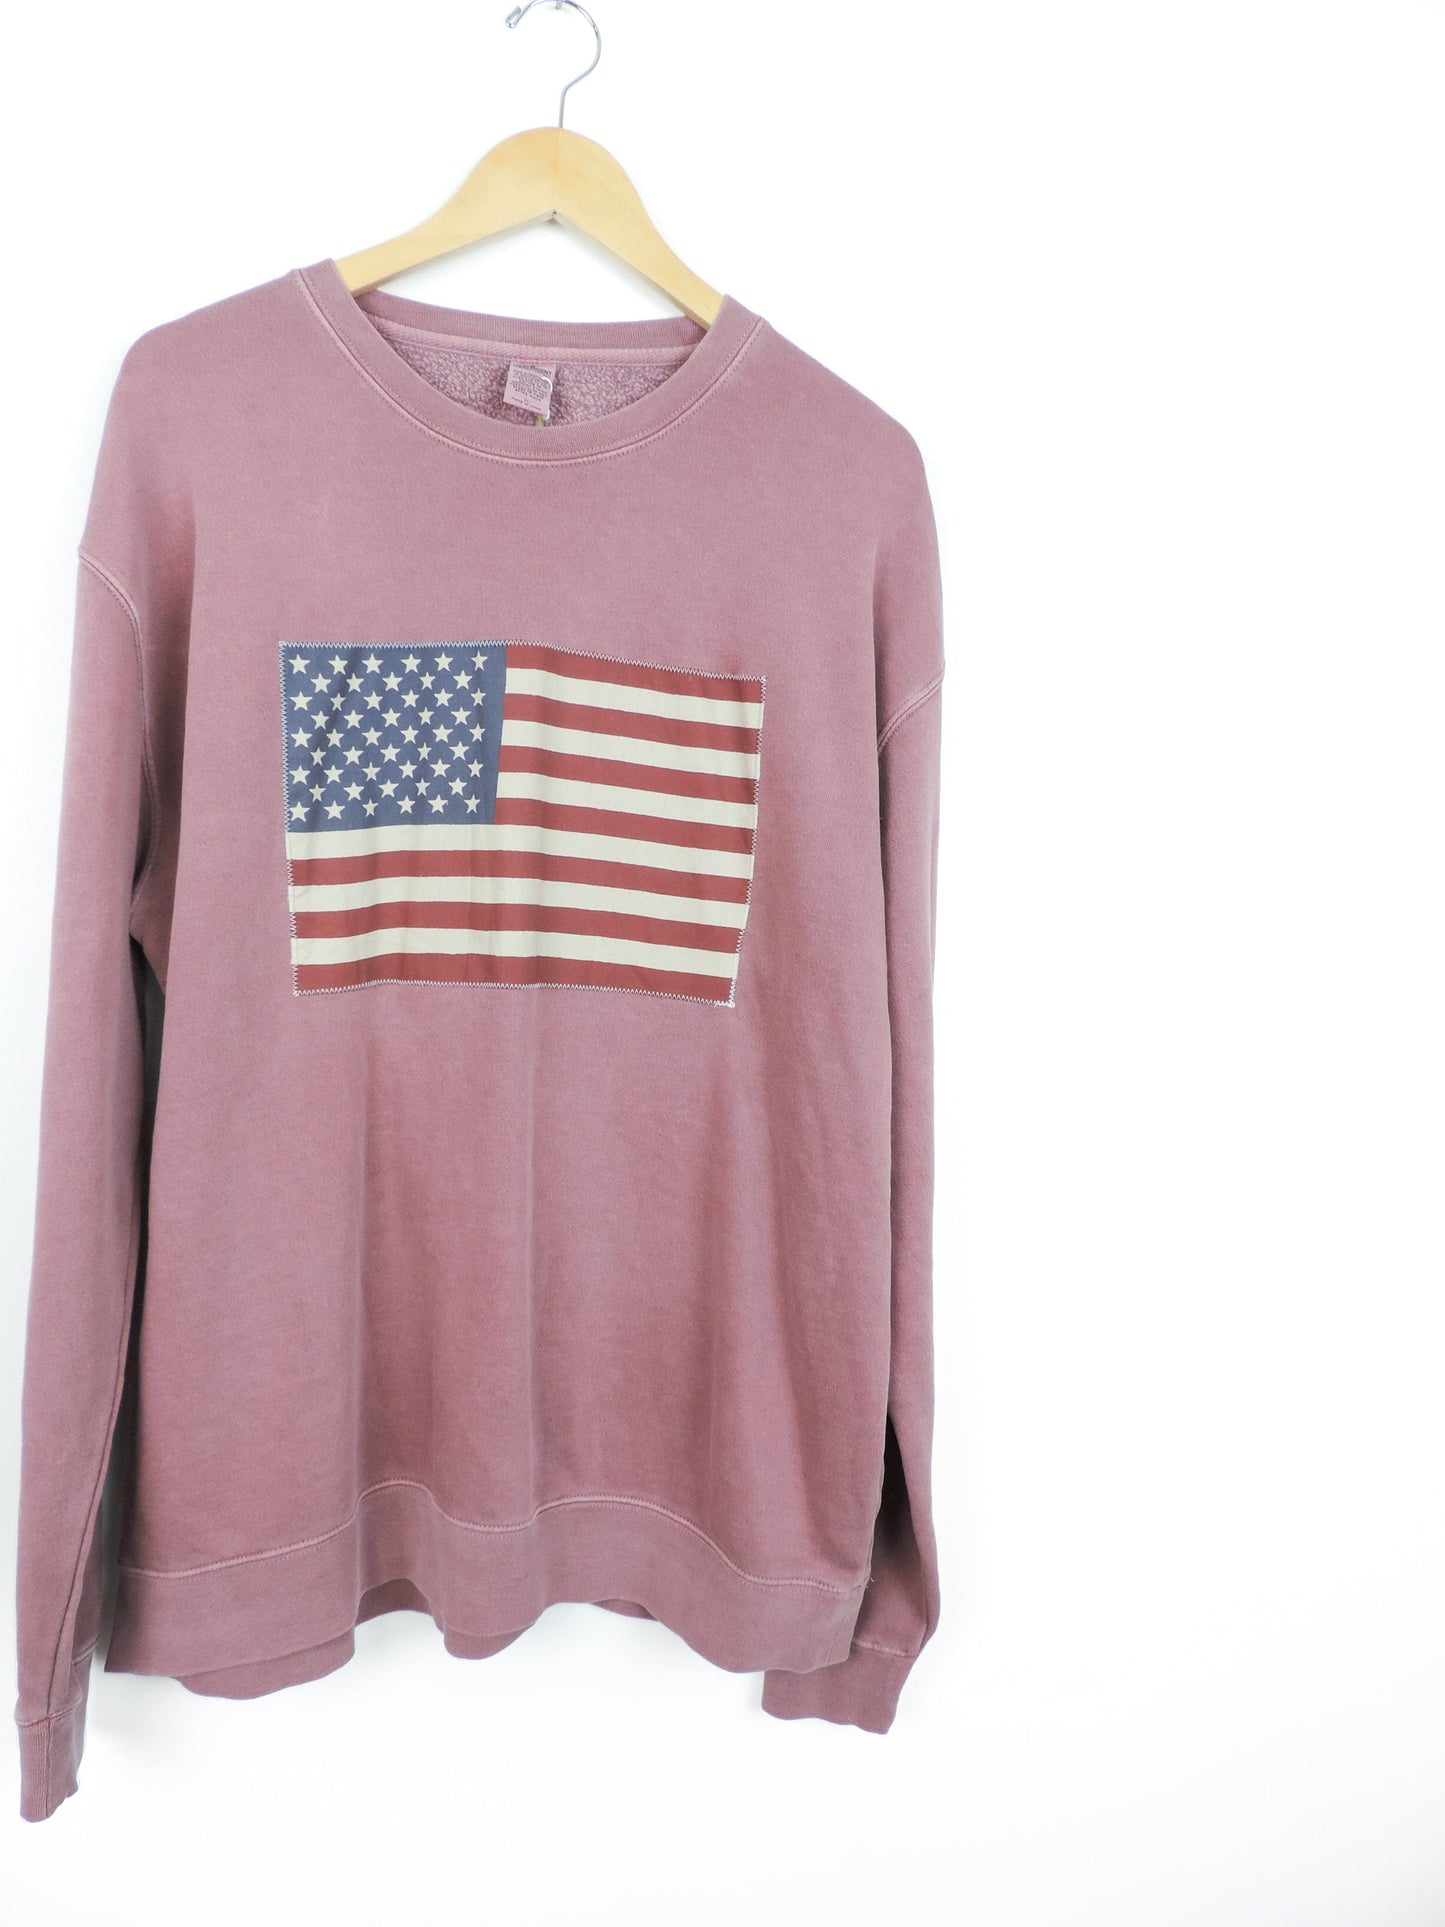 Stitched American Flag Sweatshirt